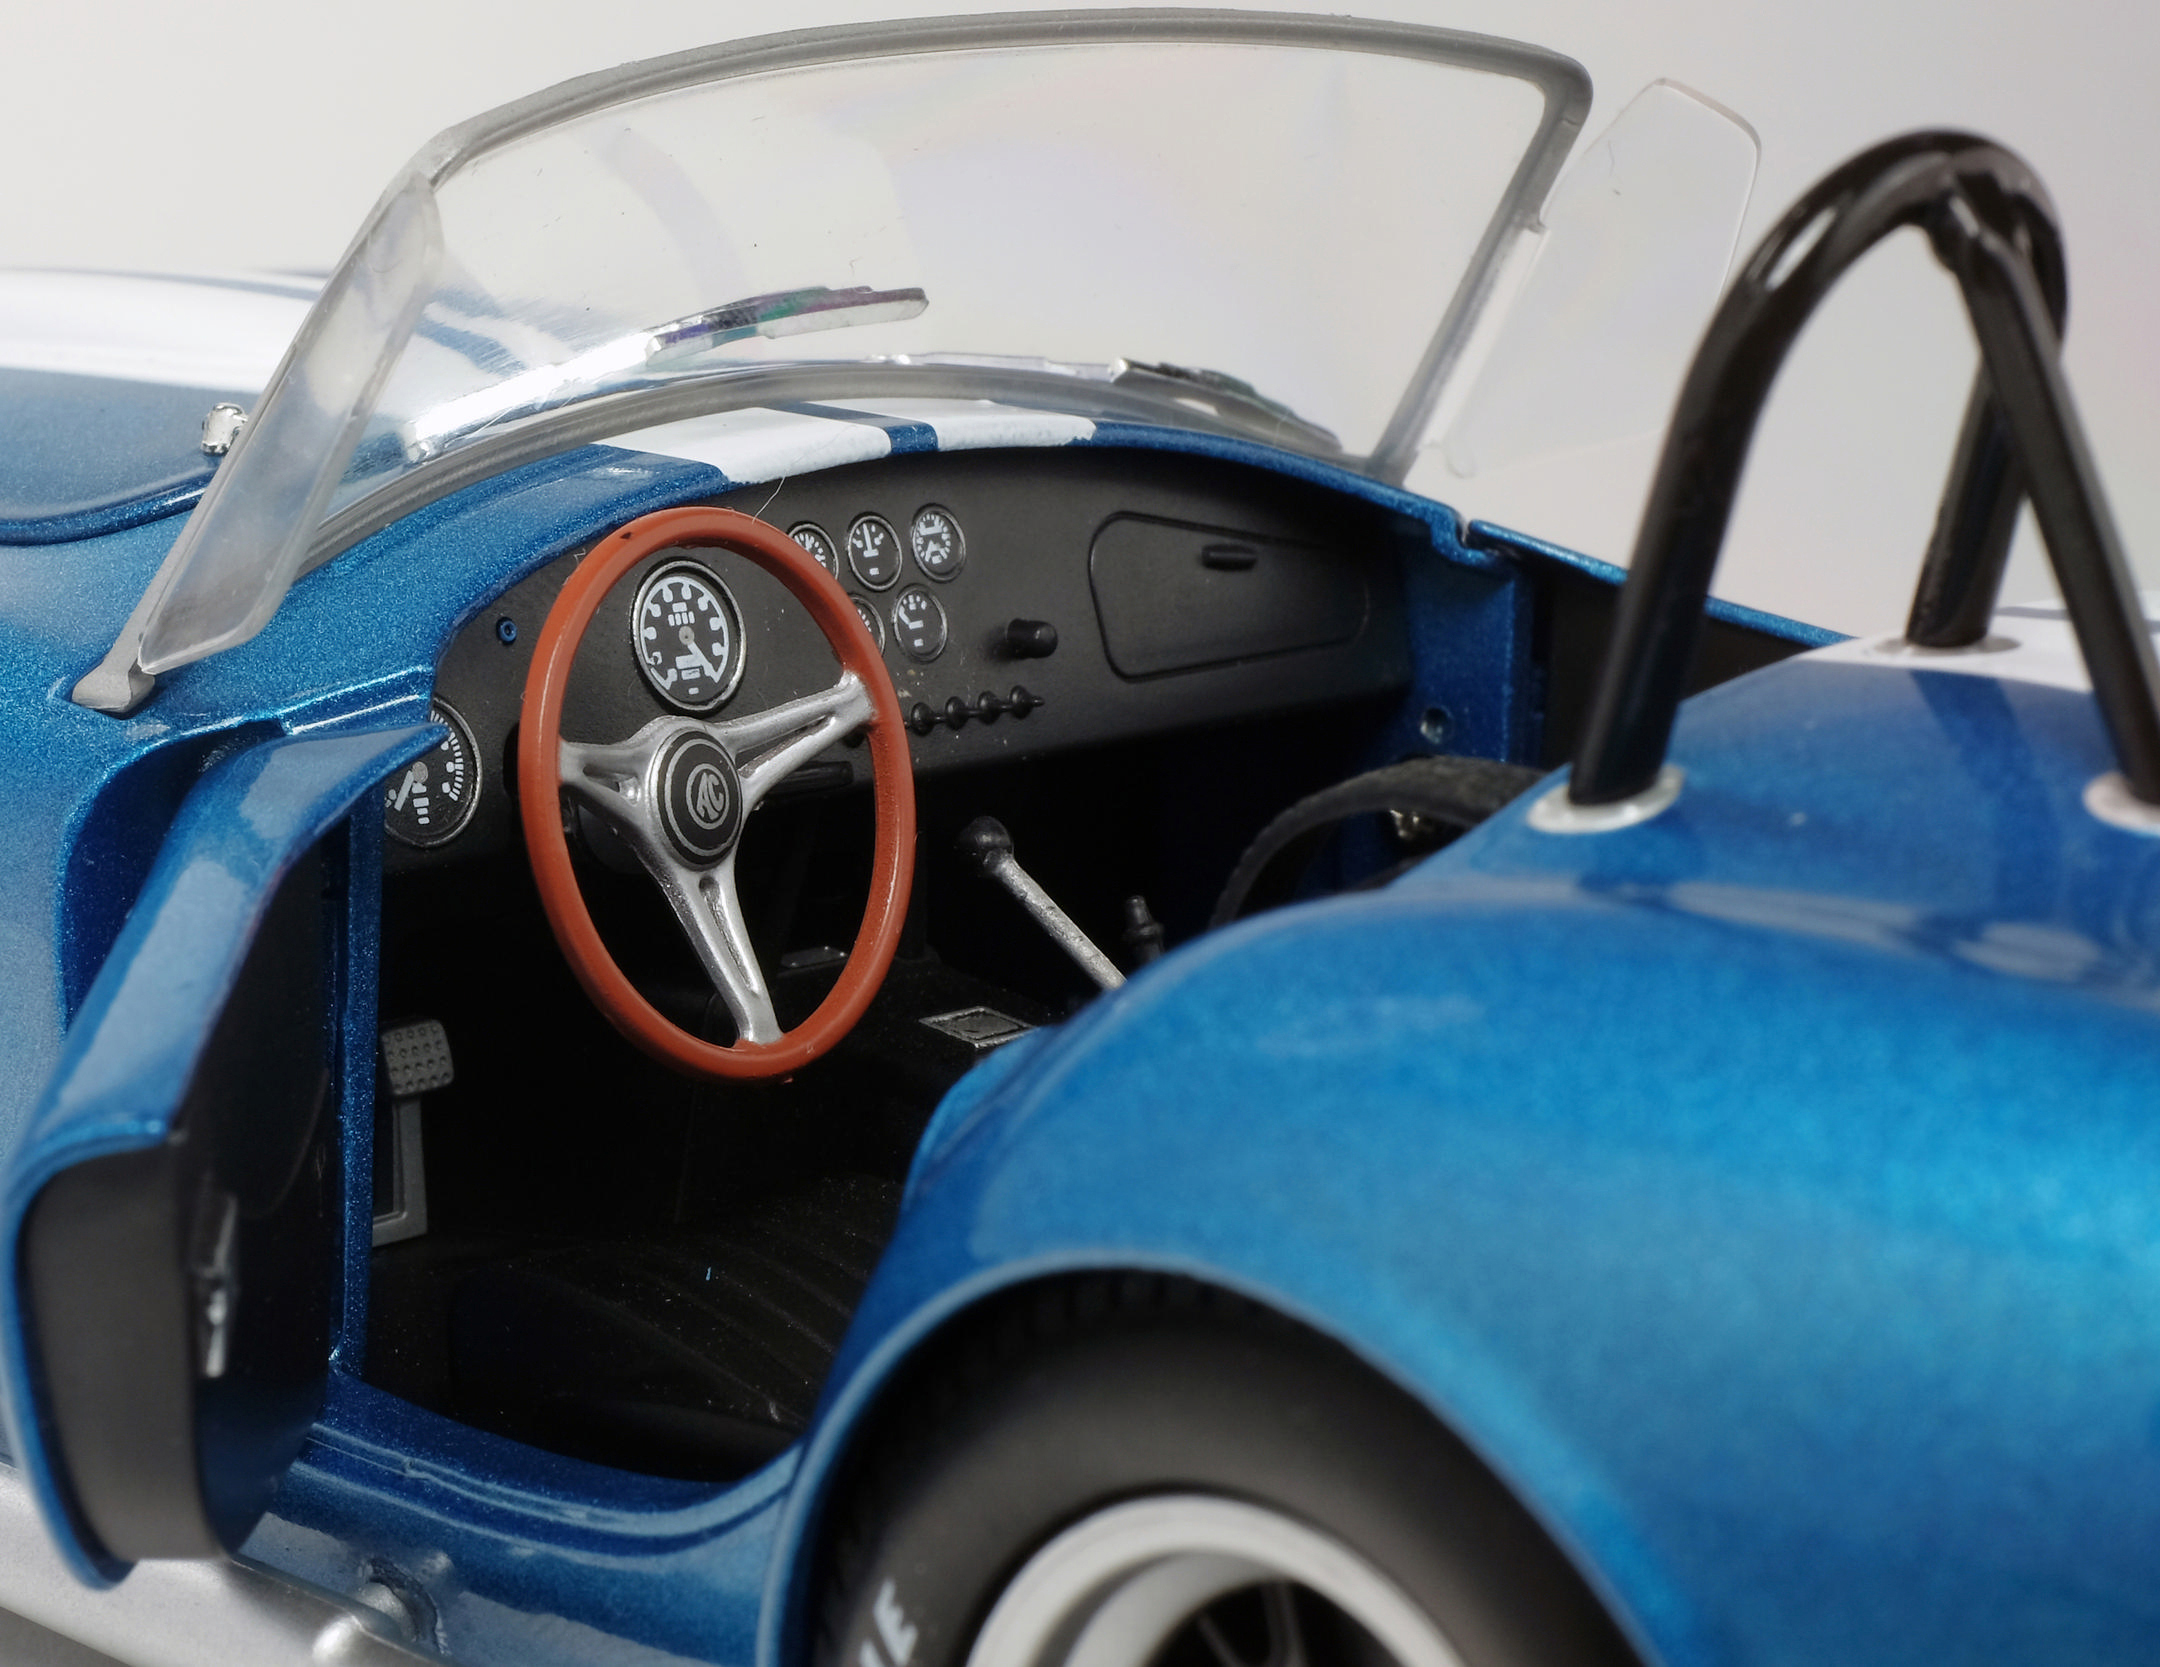 Baujahr MKII, Metallic/Blau Maßstab Spielzeugmodellauto SOLIDO 1:18, Modellauto, 427 blau AC Cobra metallic 1965,